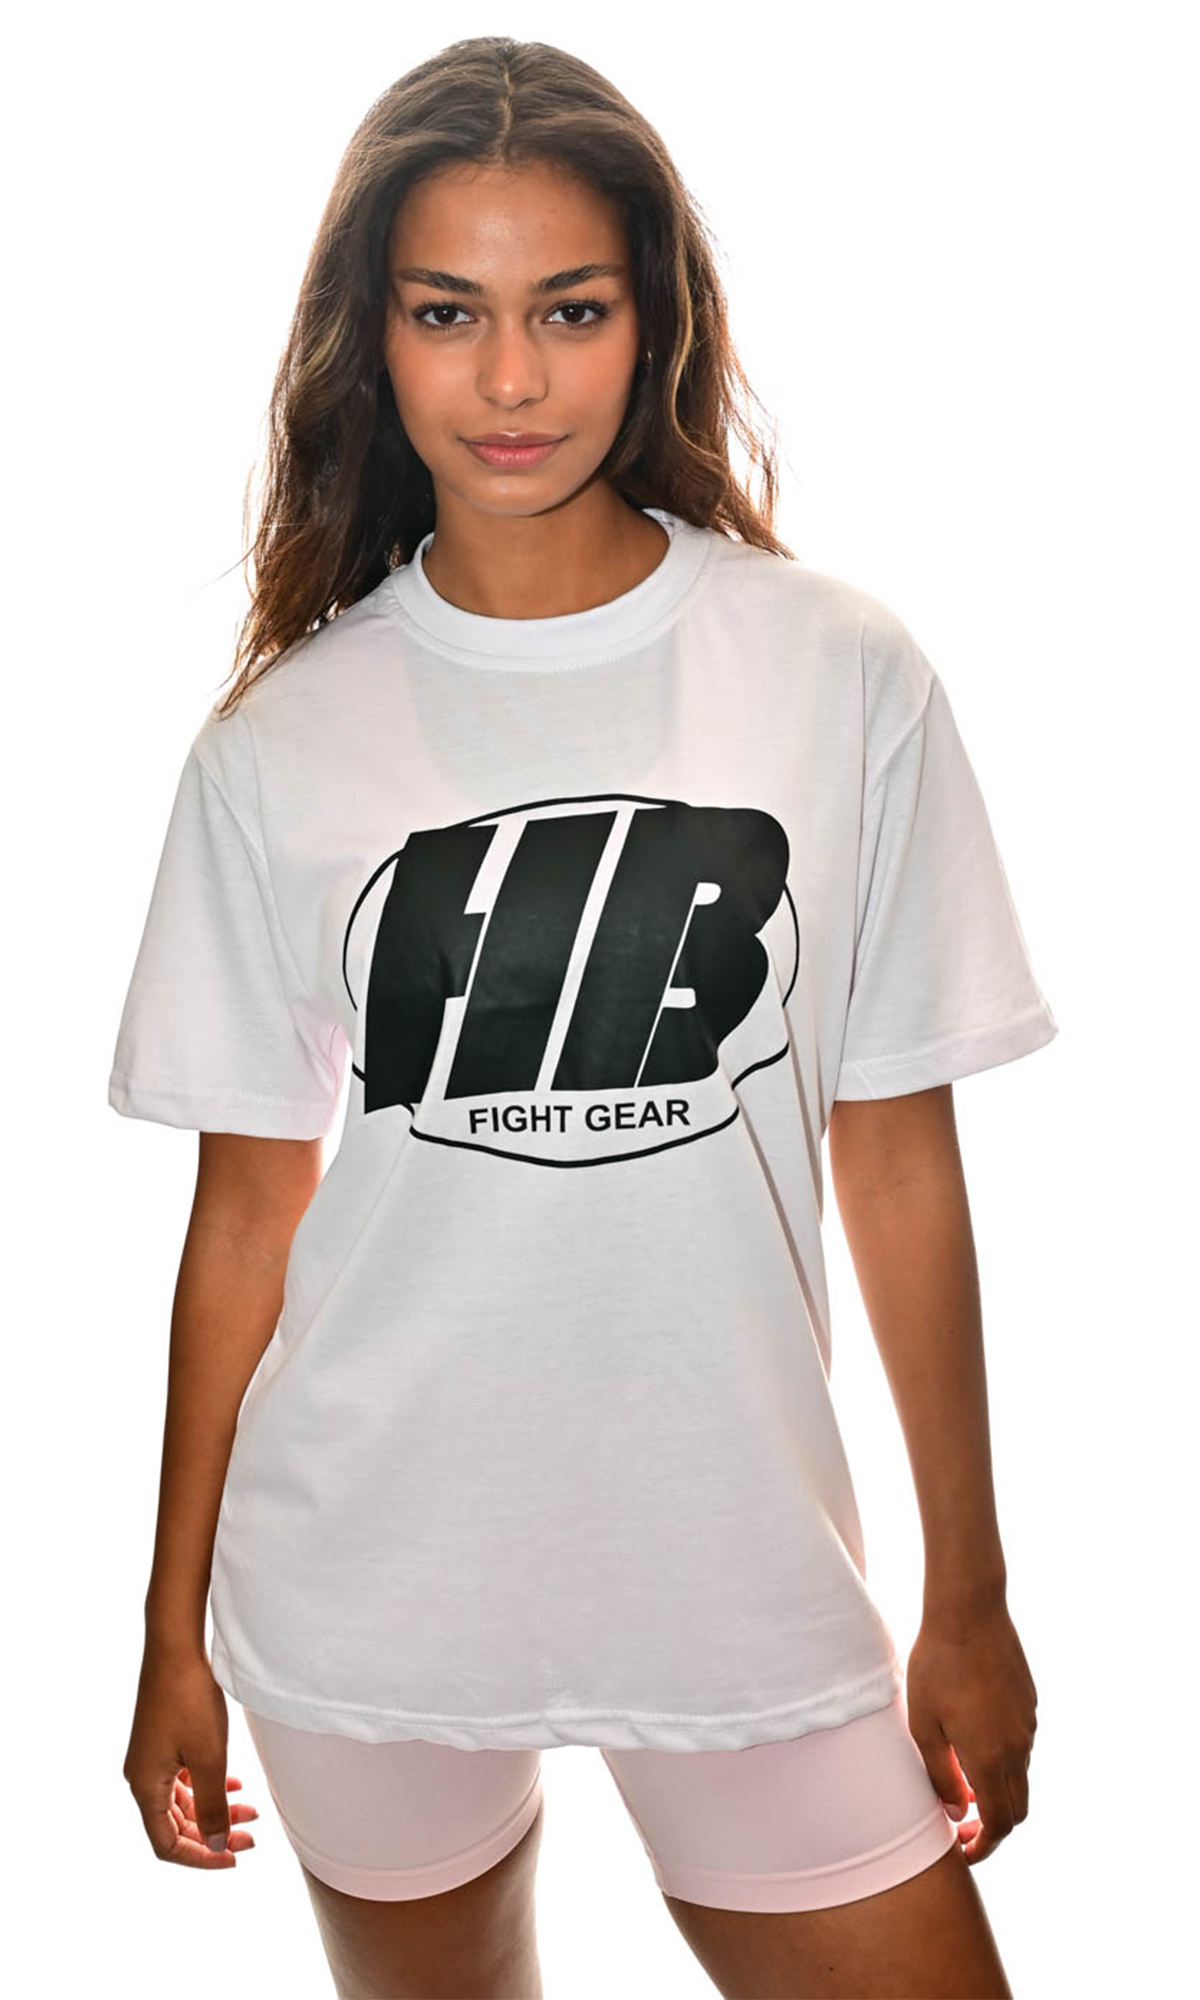 white-tshirt-front-hb